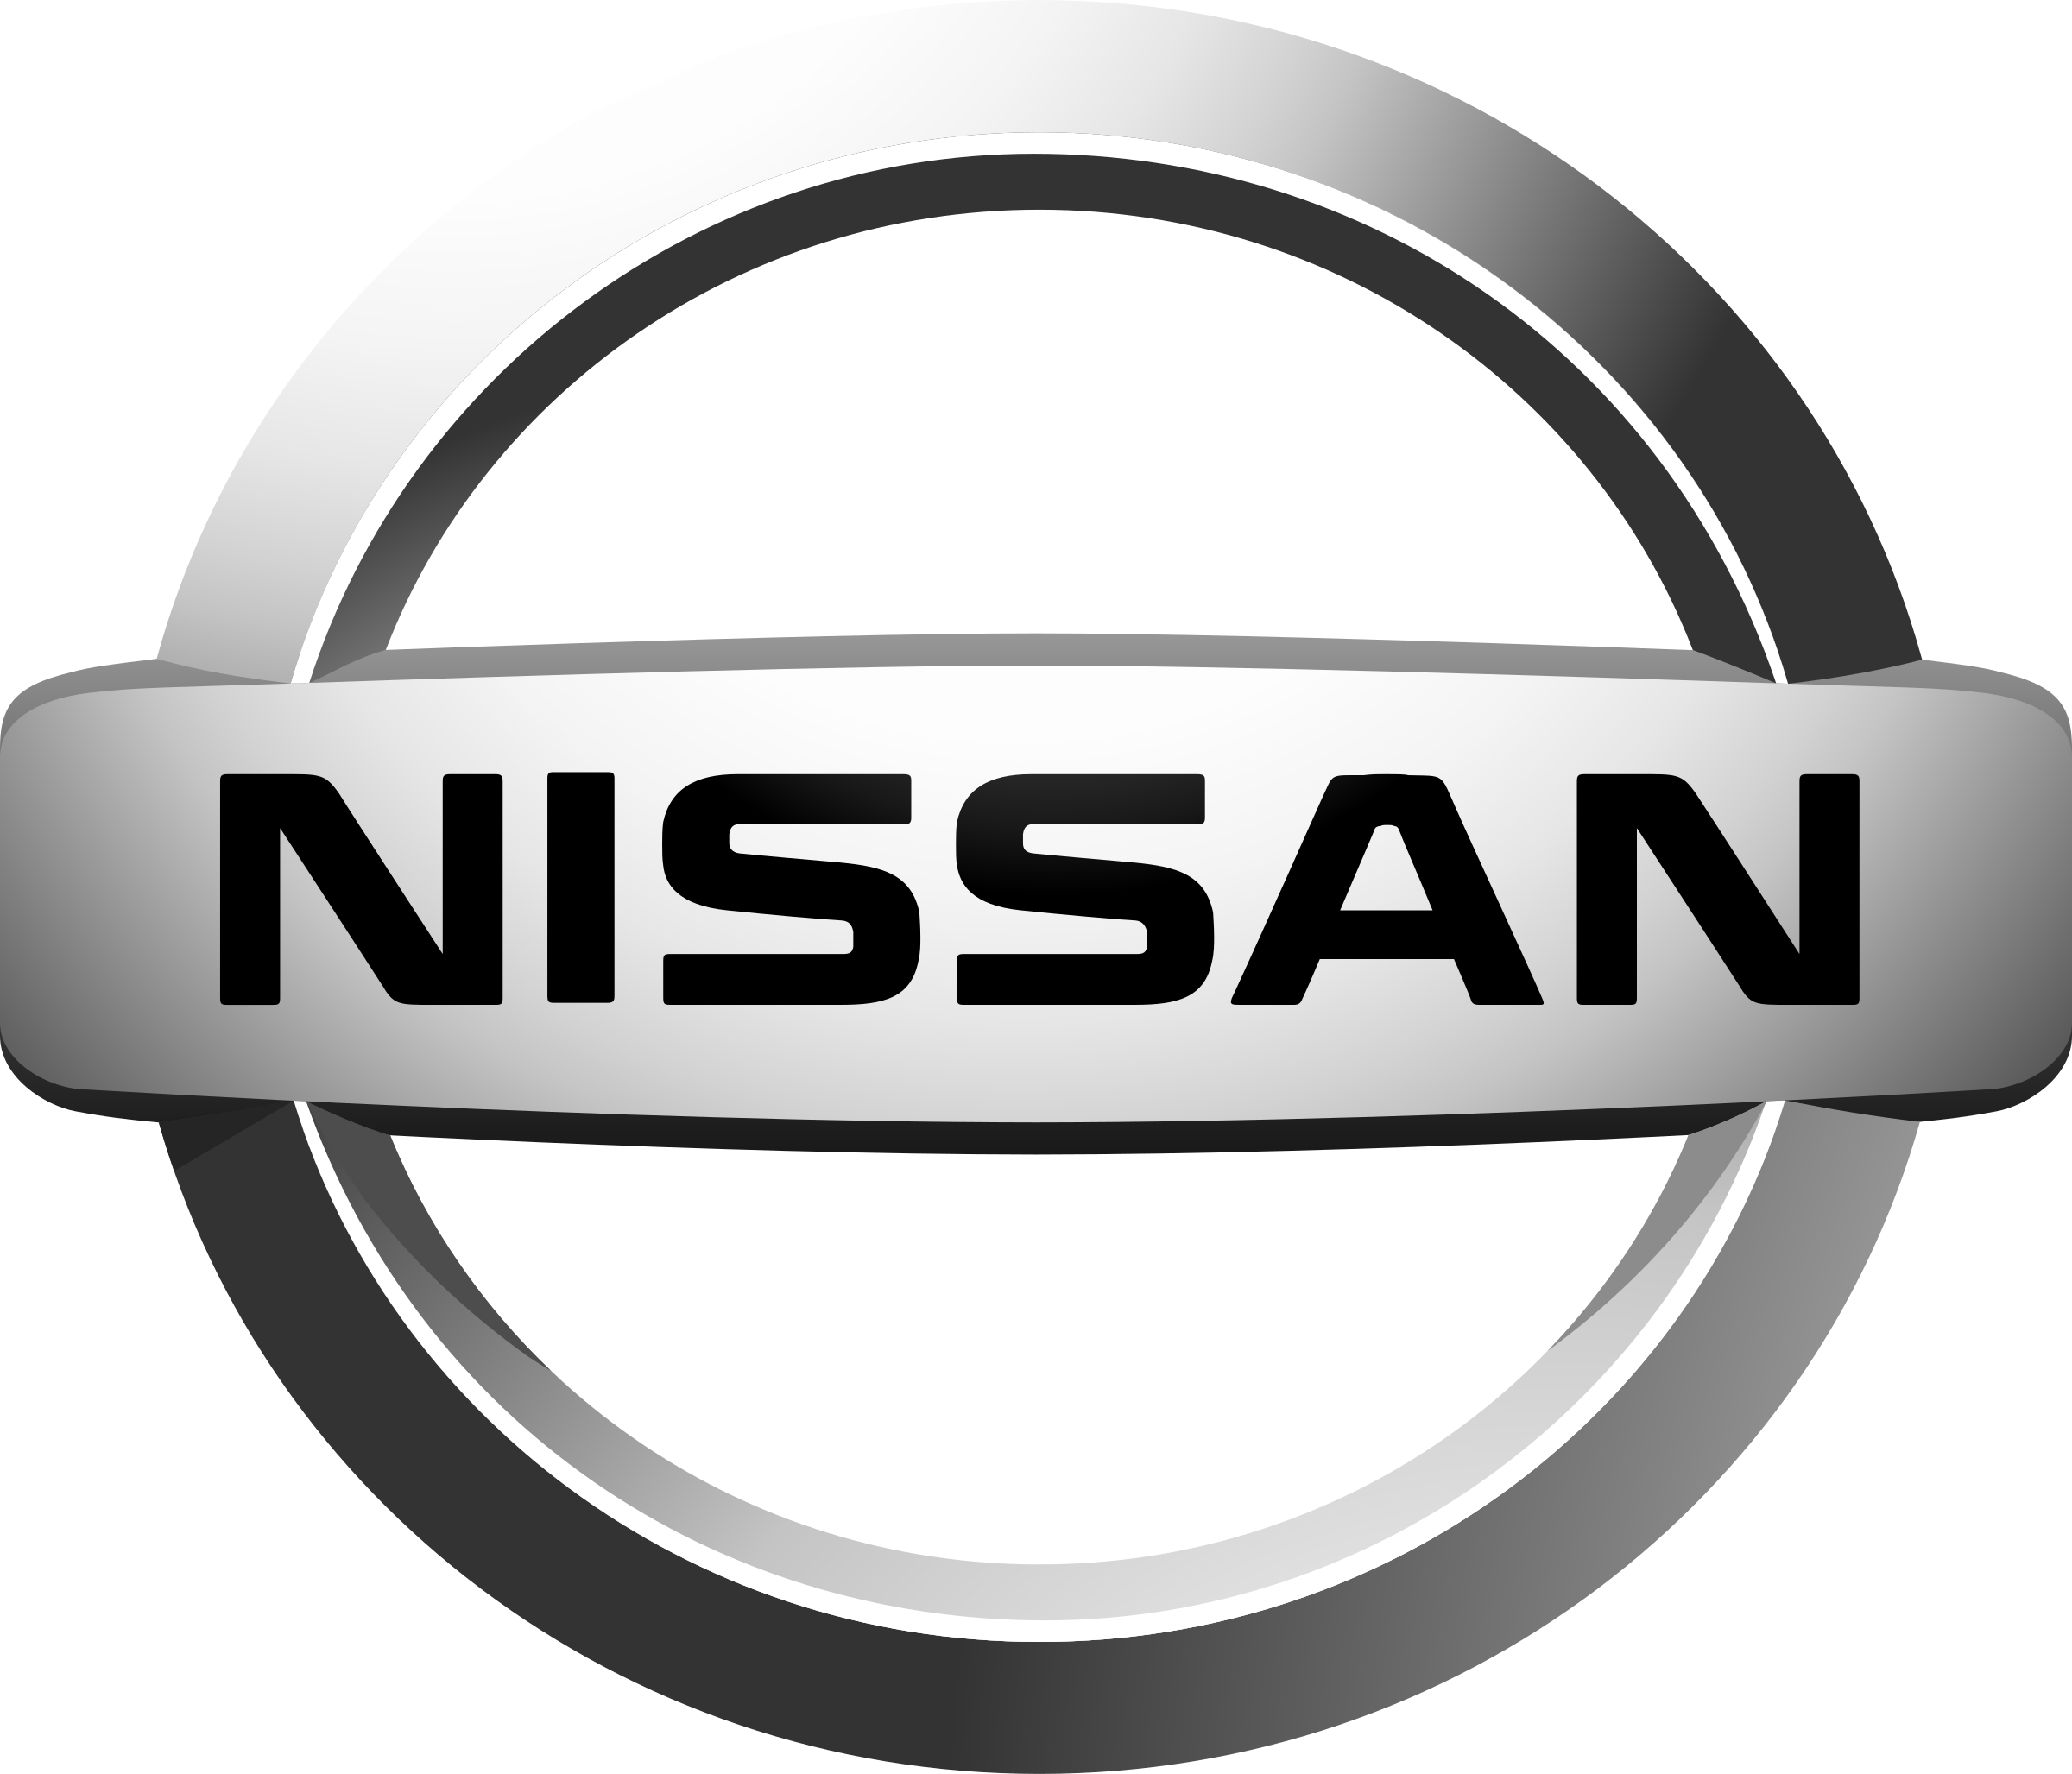 nissan-6-logo-png-transparent.png